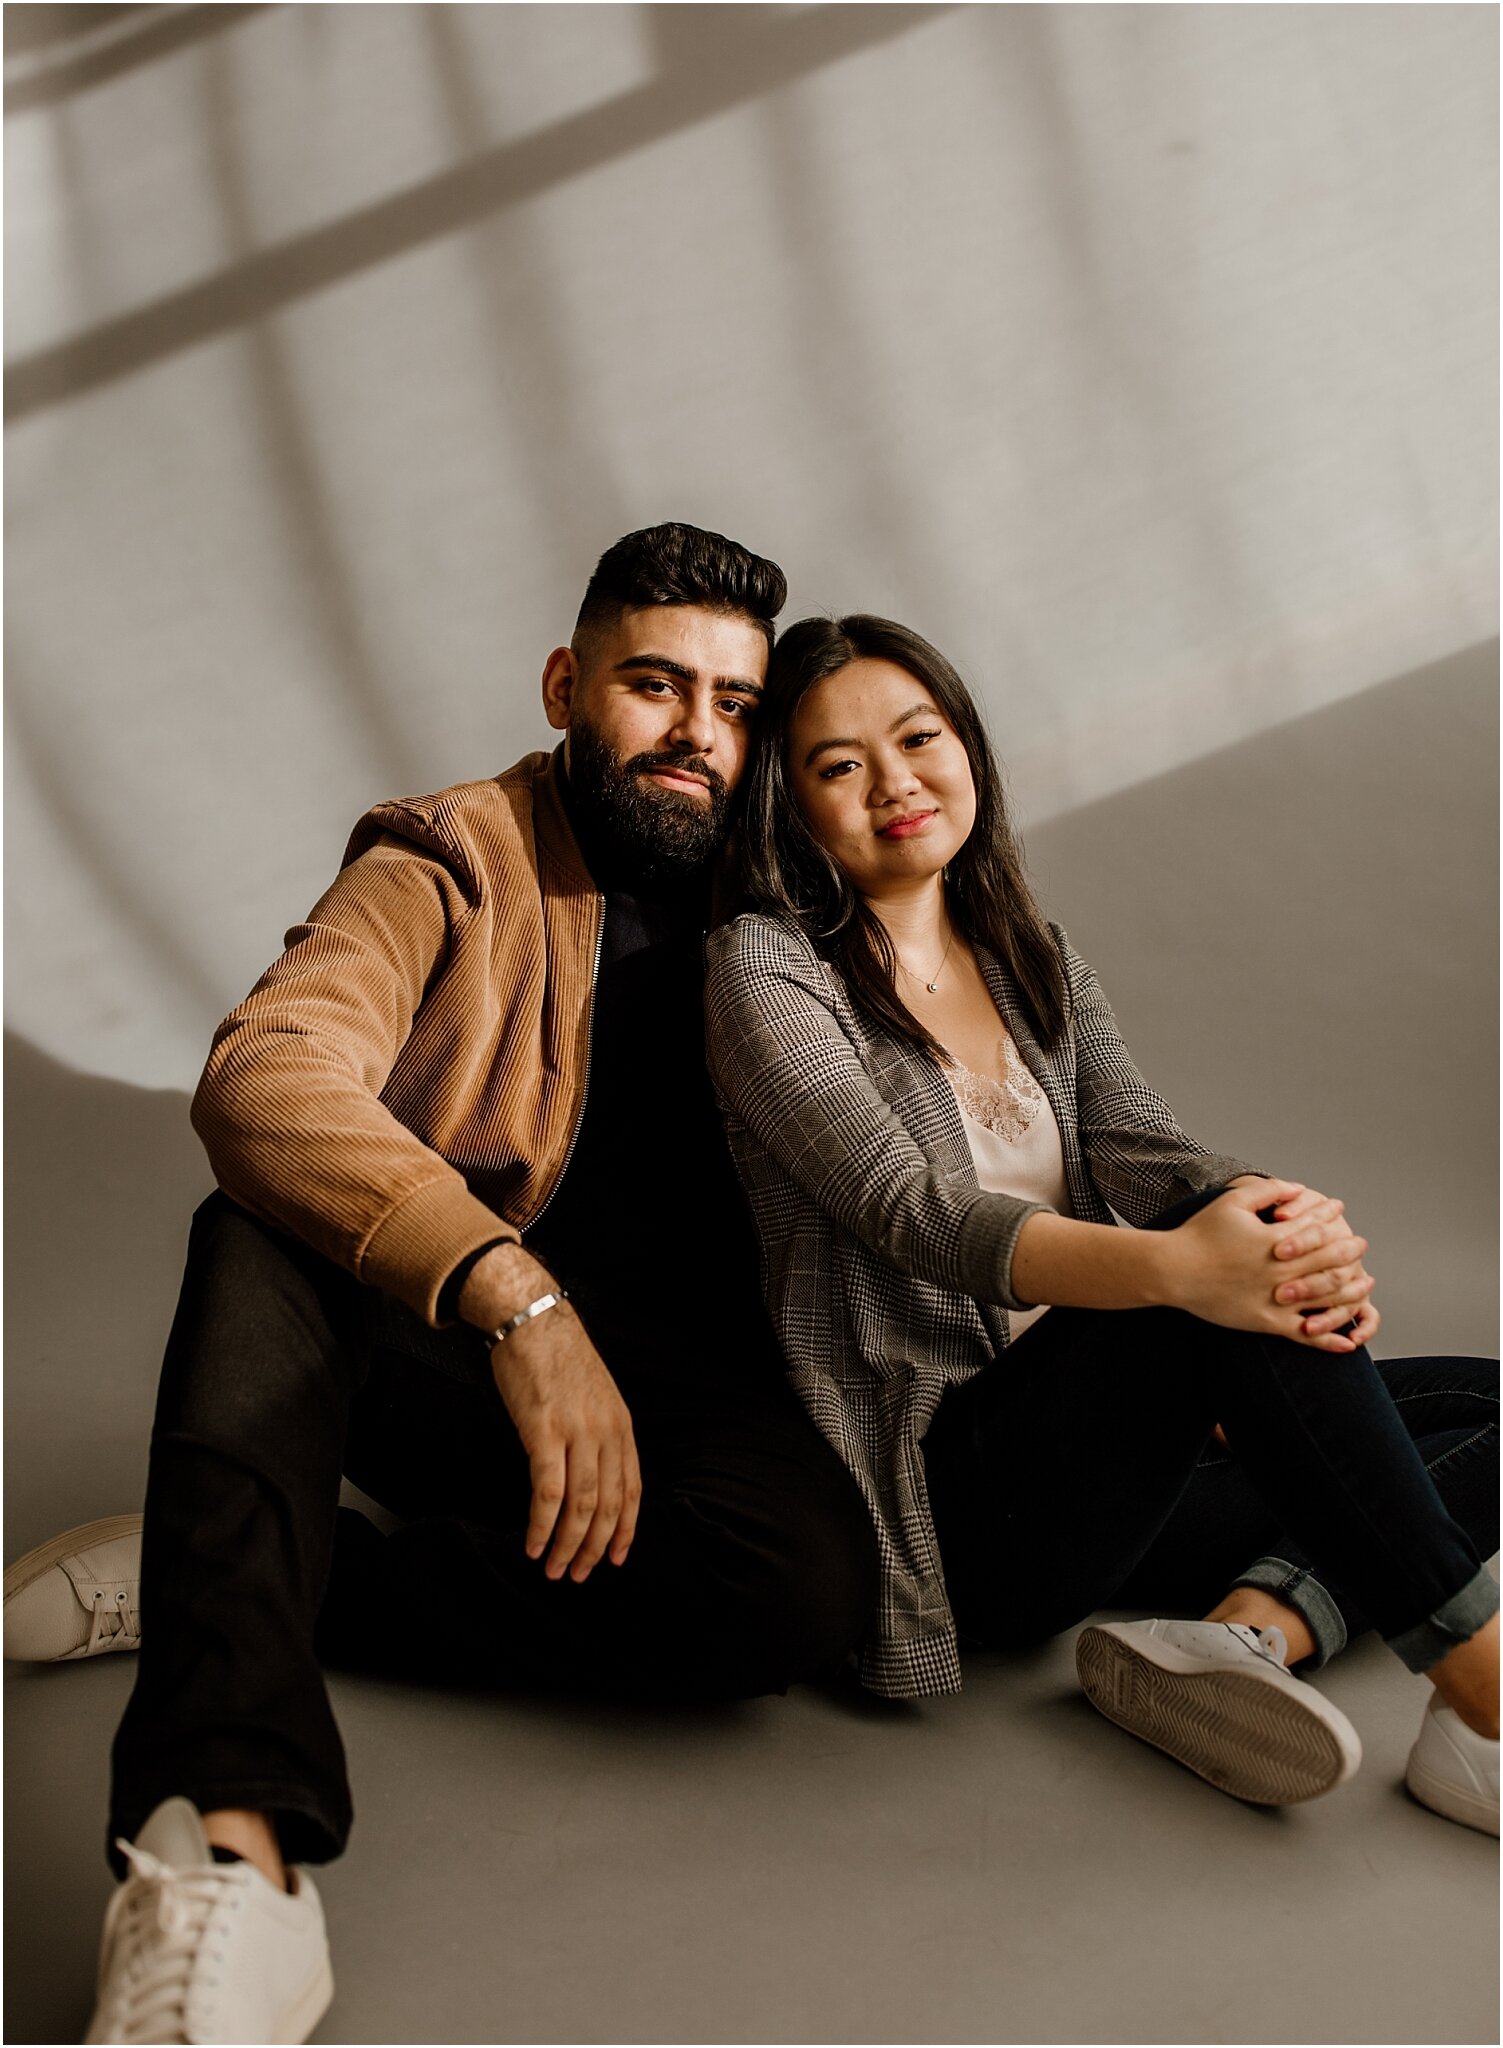 Couple Photoshoot Poses | Studio Photography Ideas